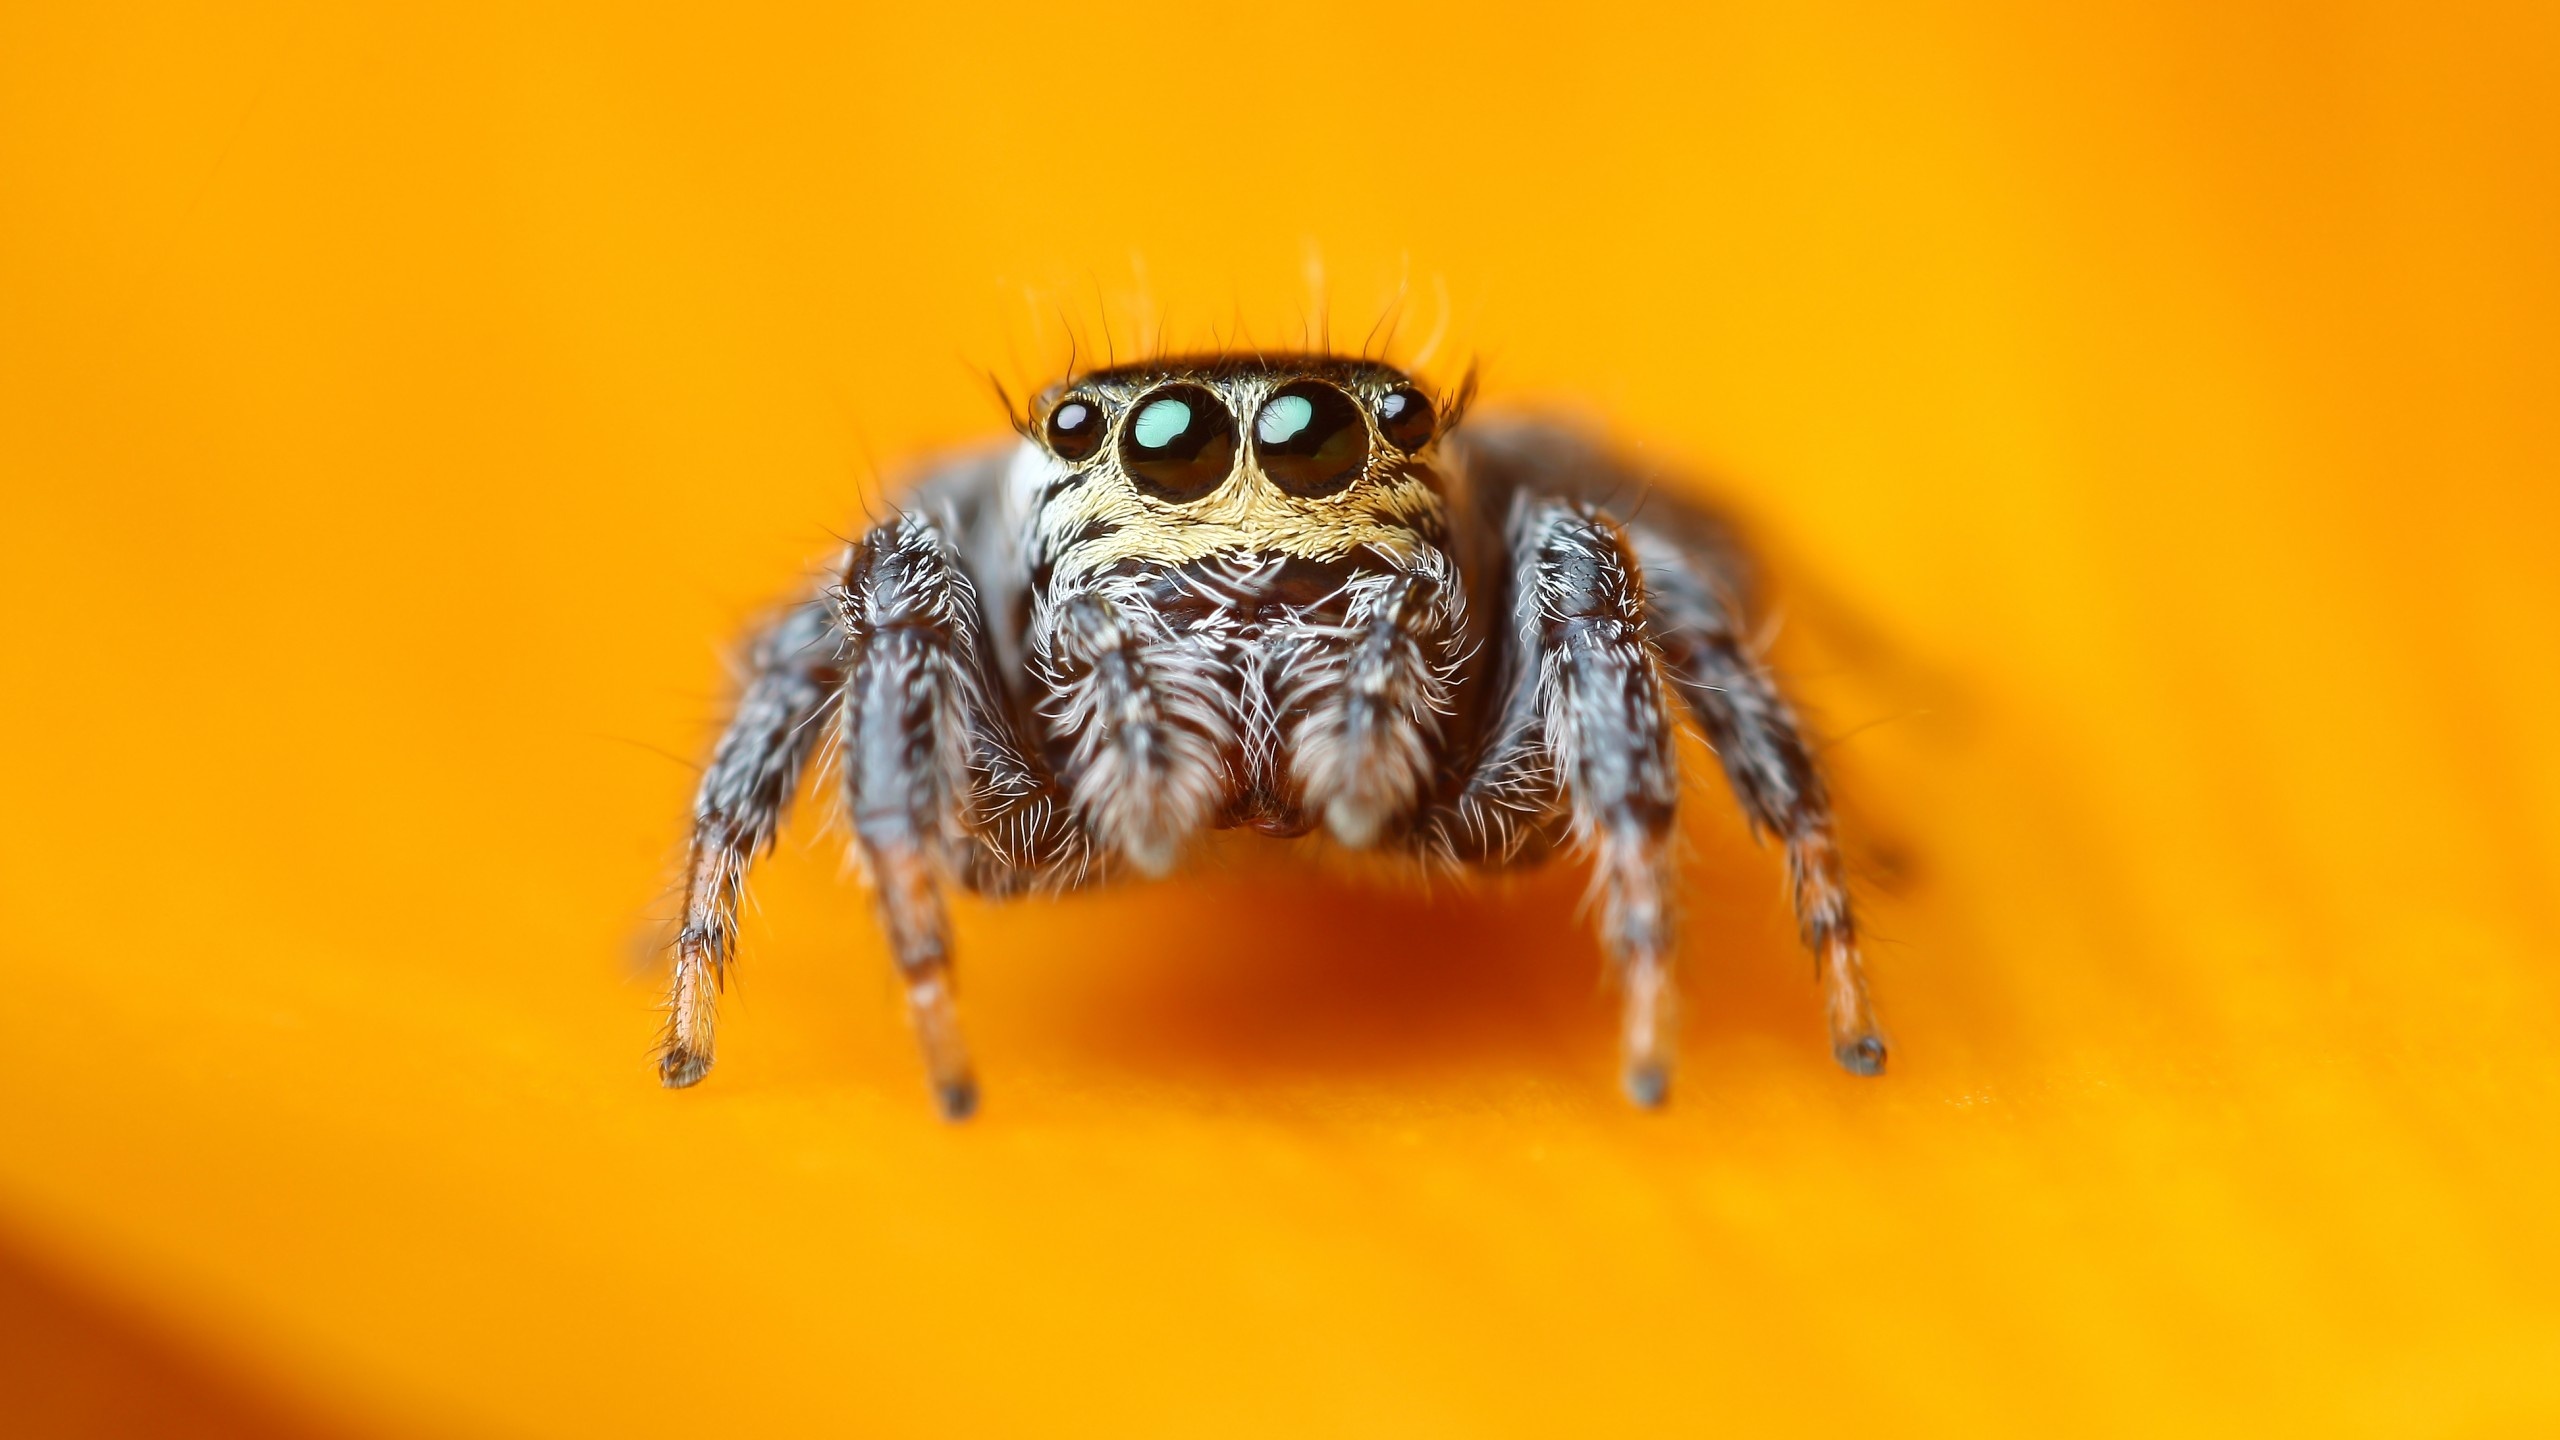 Spider, Jumping spider wallpaper, Macro photography, Arachnid beauty, 2560x1440 HD Desktop